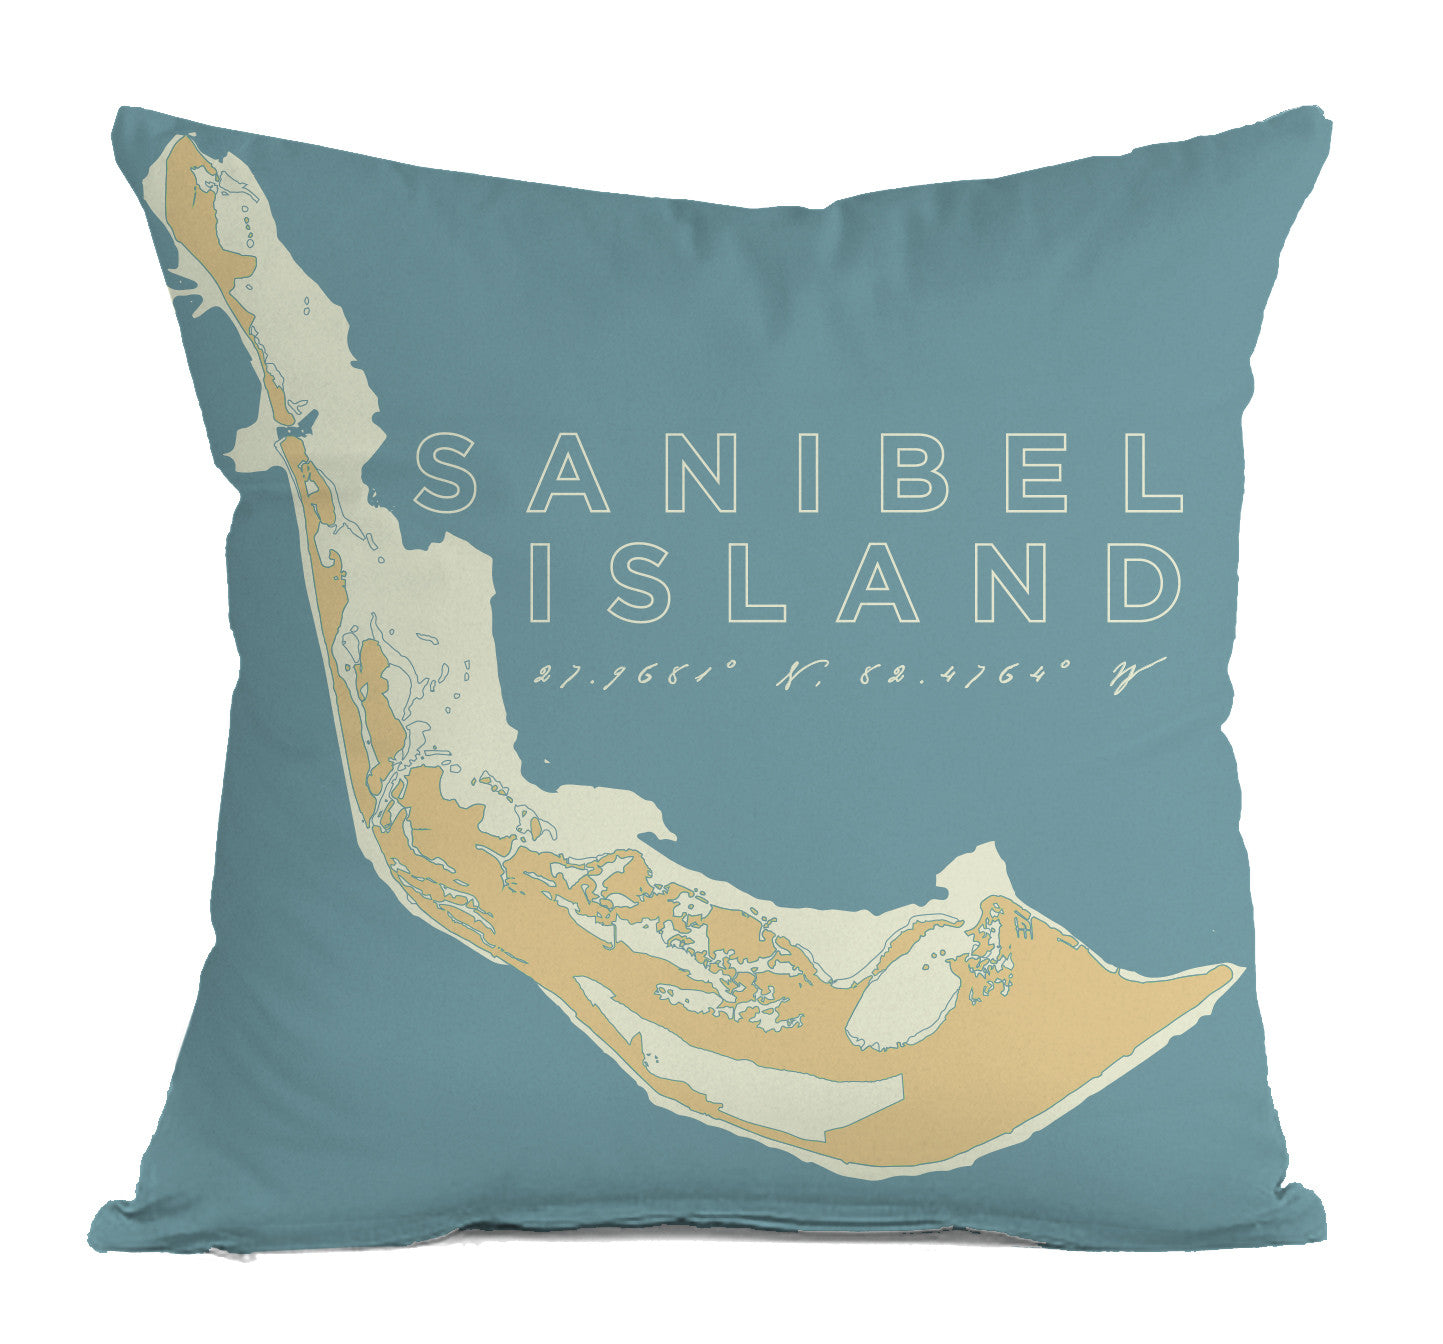 Sanibel Island Decorative Throw Pillow, Faded Aqua & Papaya